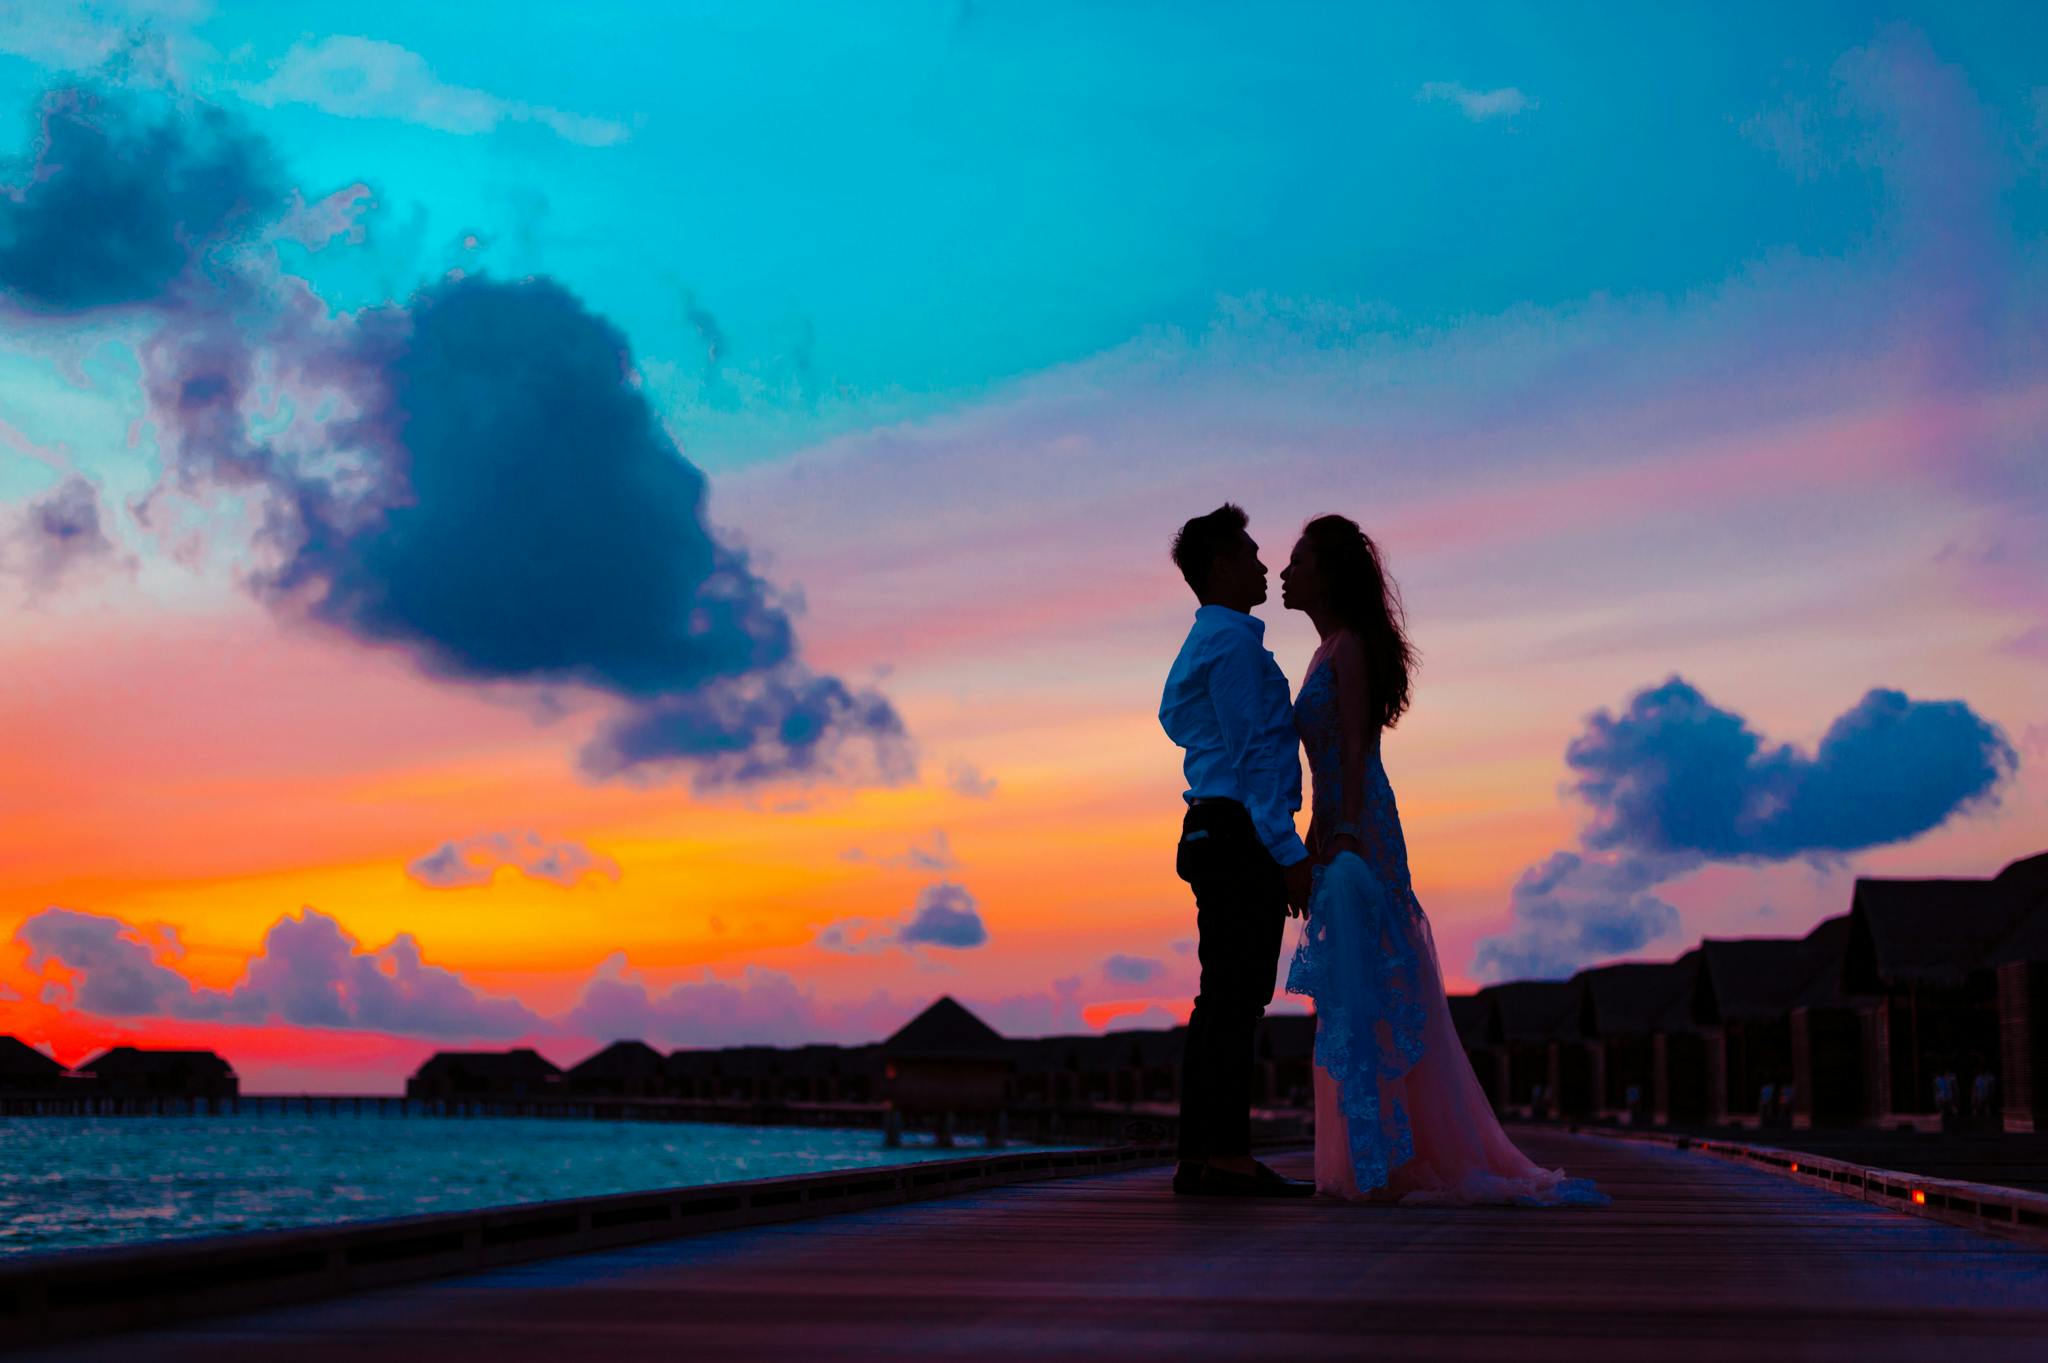 Bride and groom standing on sea dock during golden hour | Source: Pexels